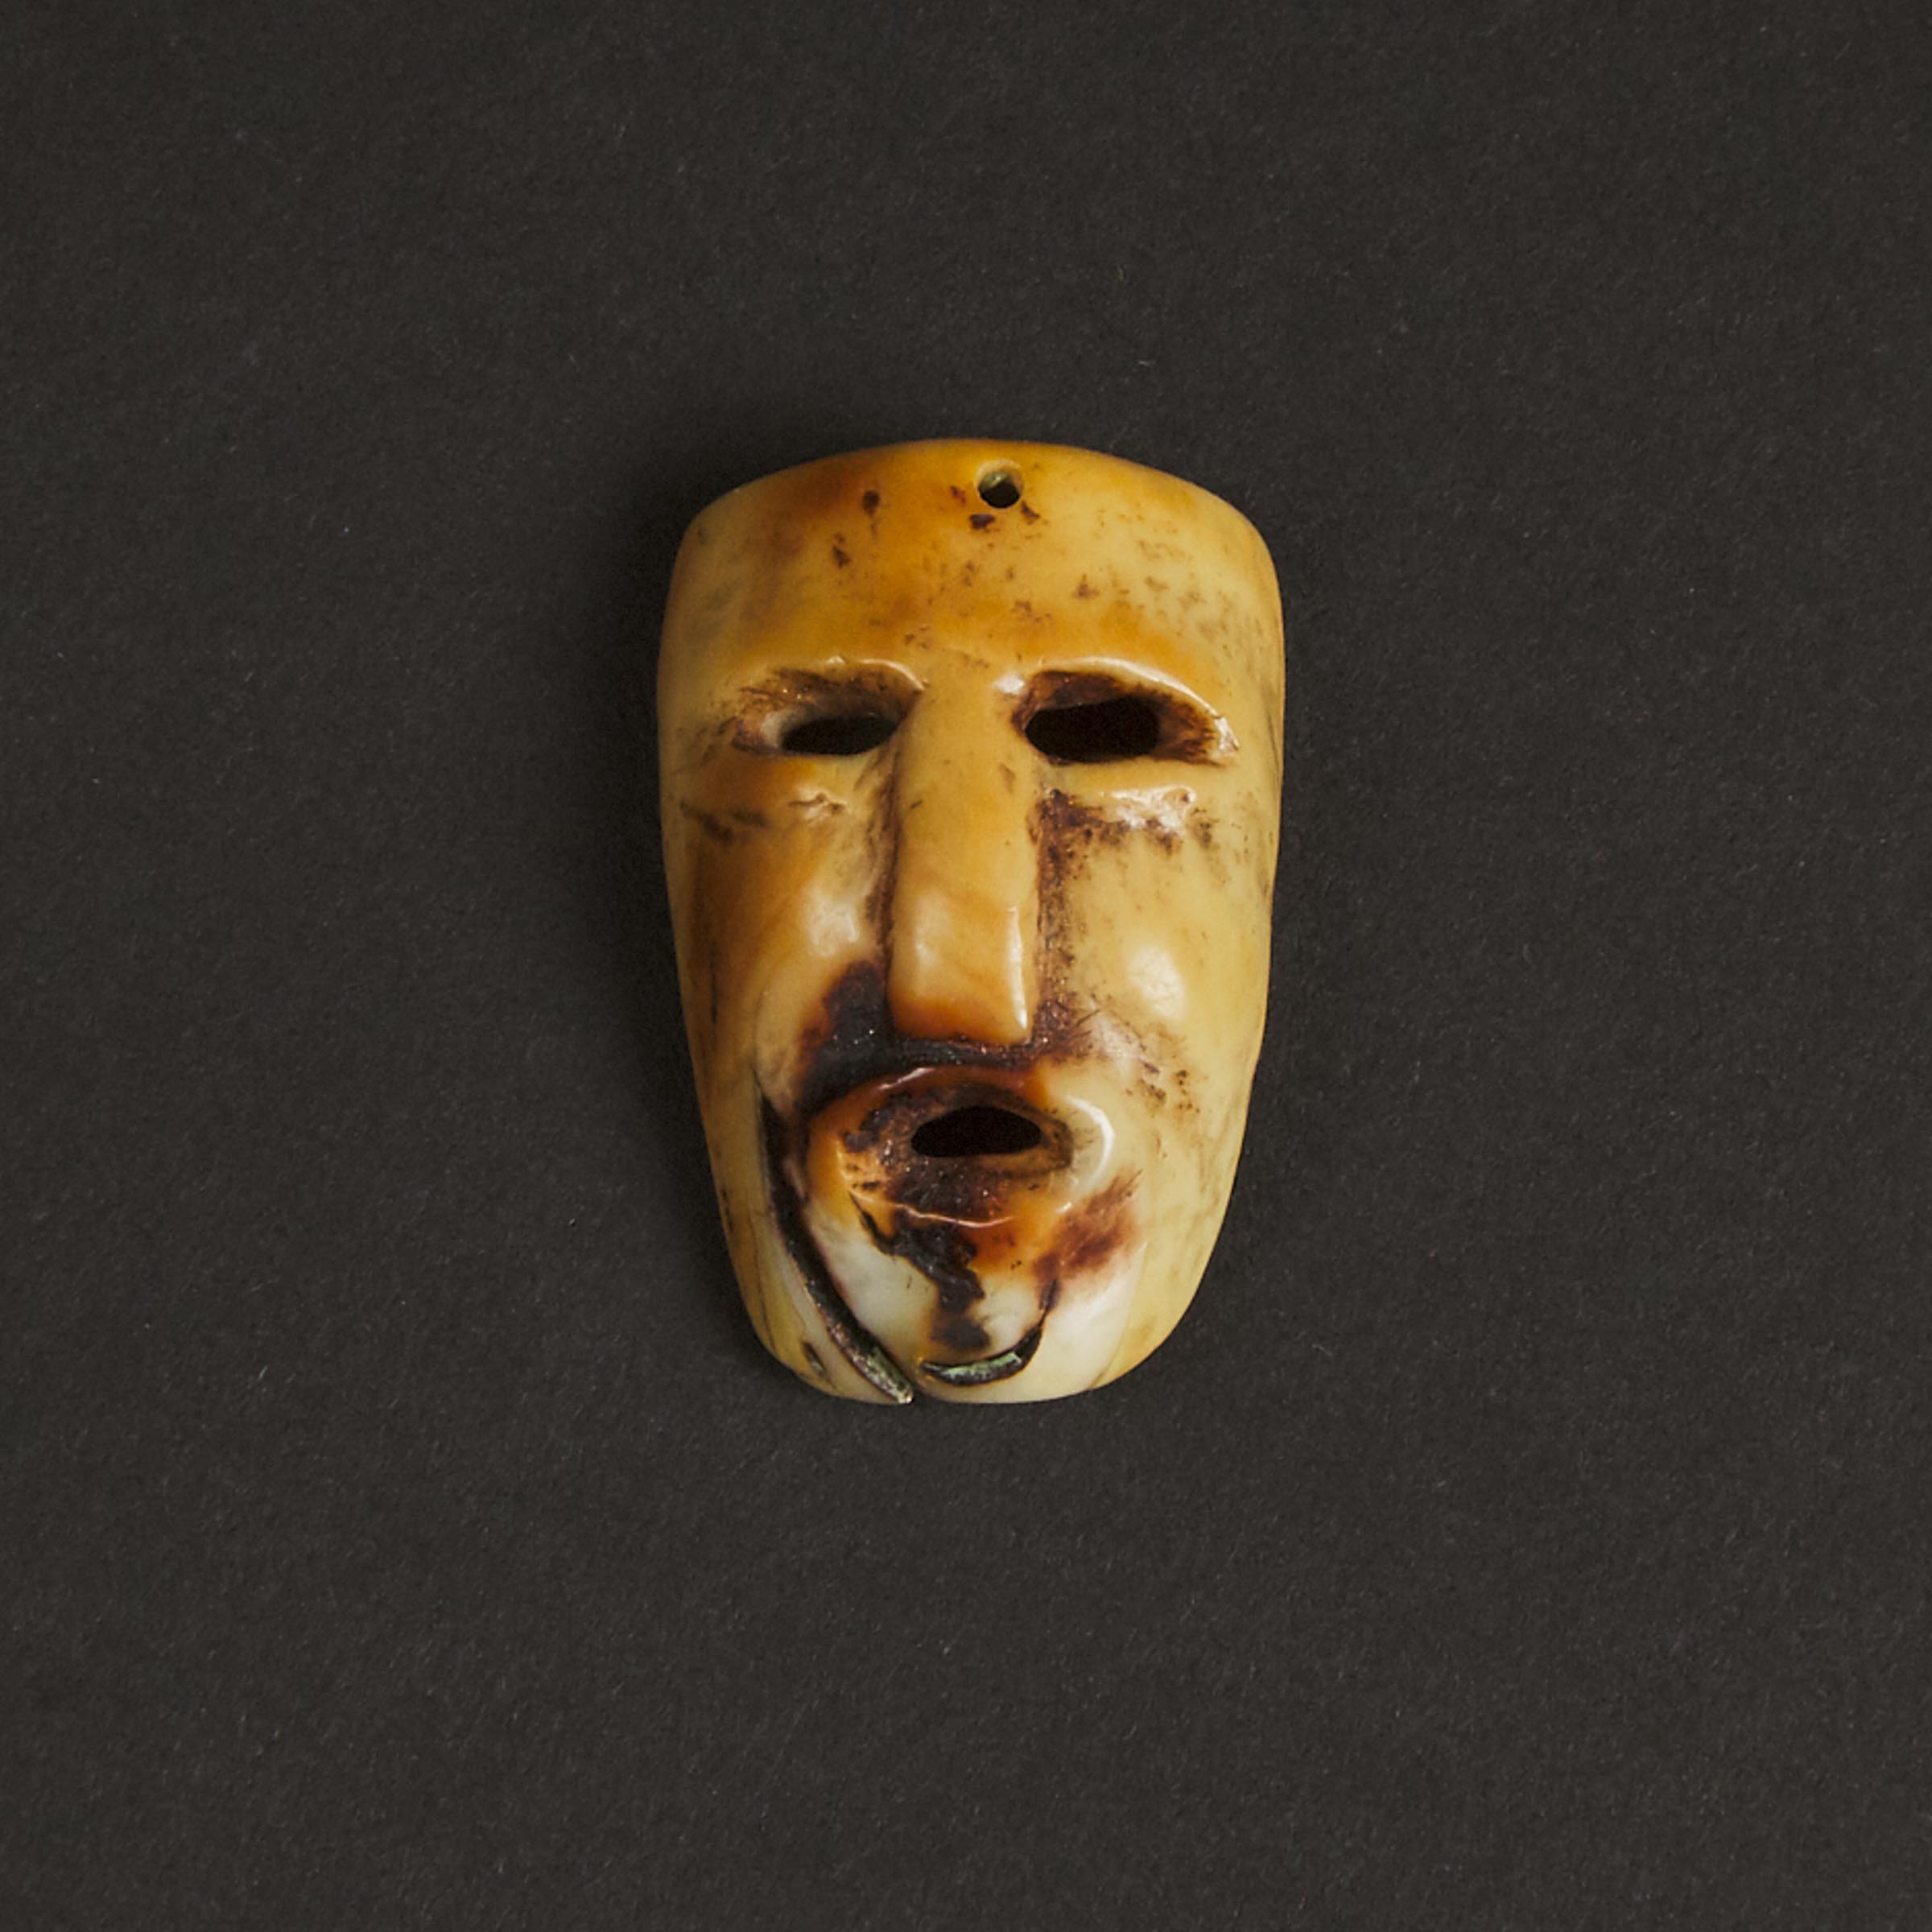 Maskette, Possibly Dorset Culture, ca. 800 BCE – 1300 CE